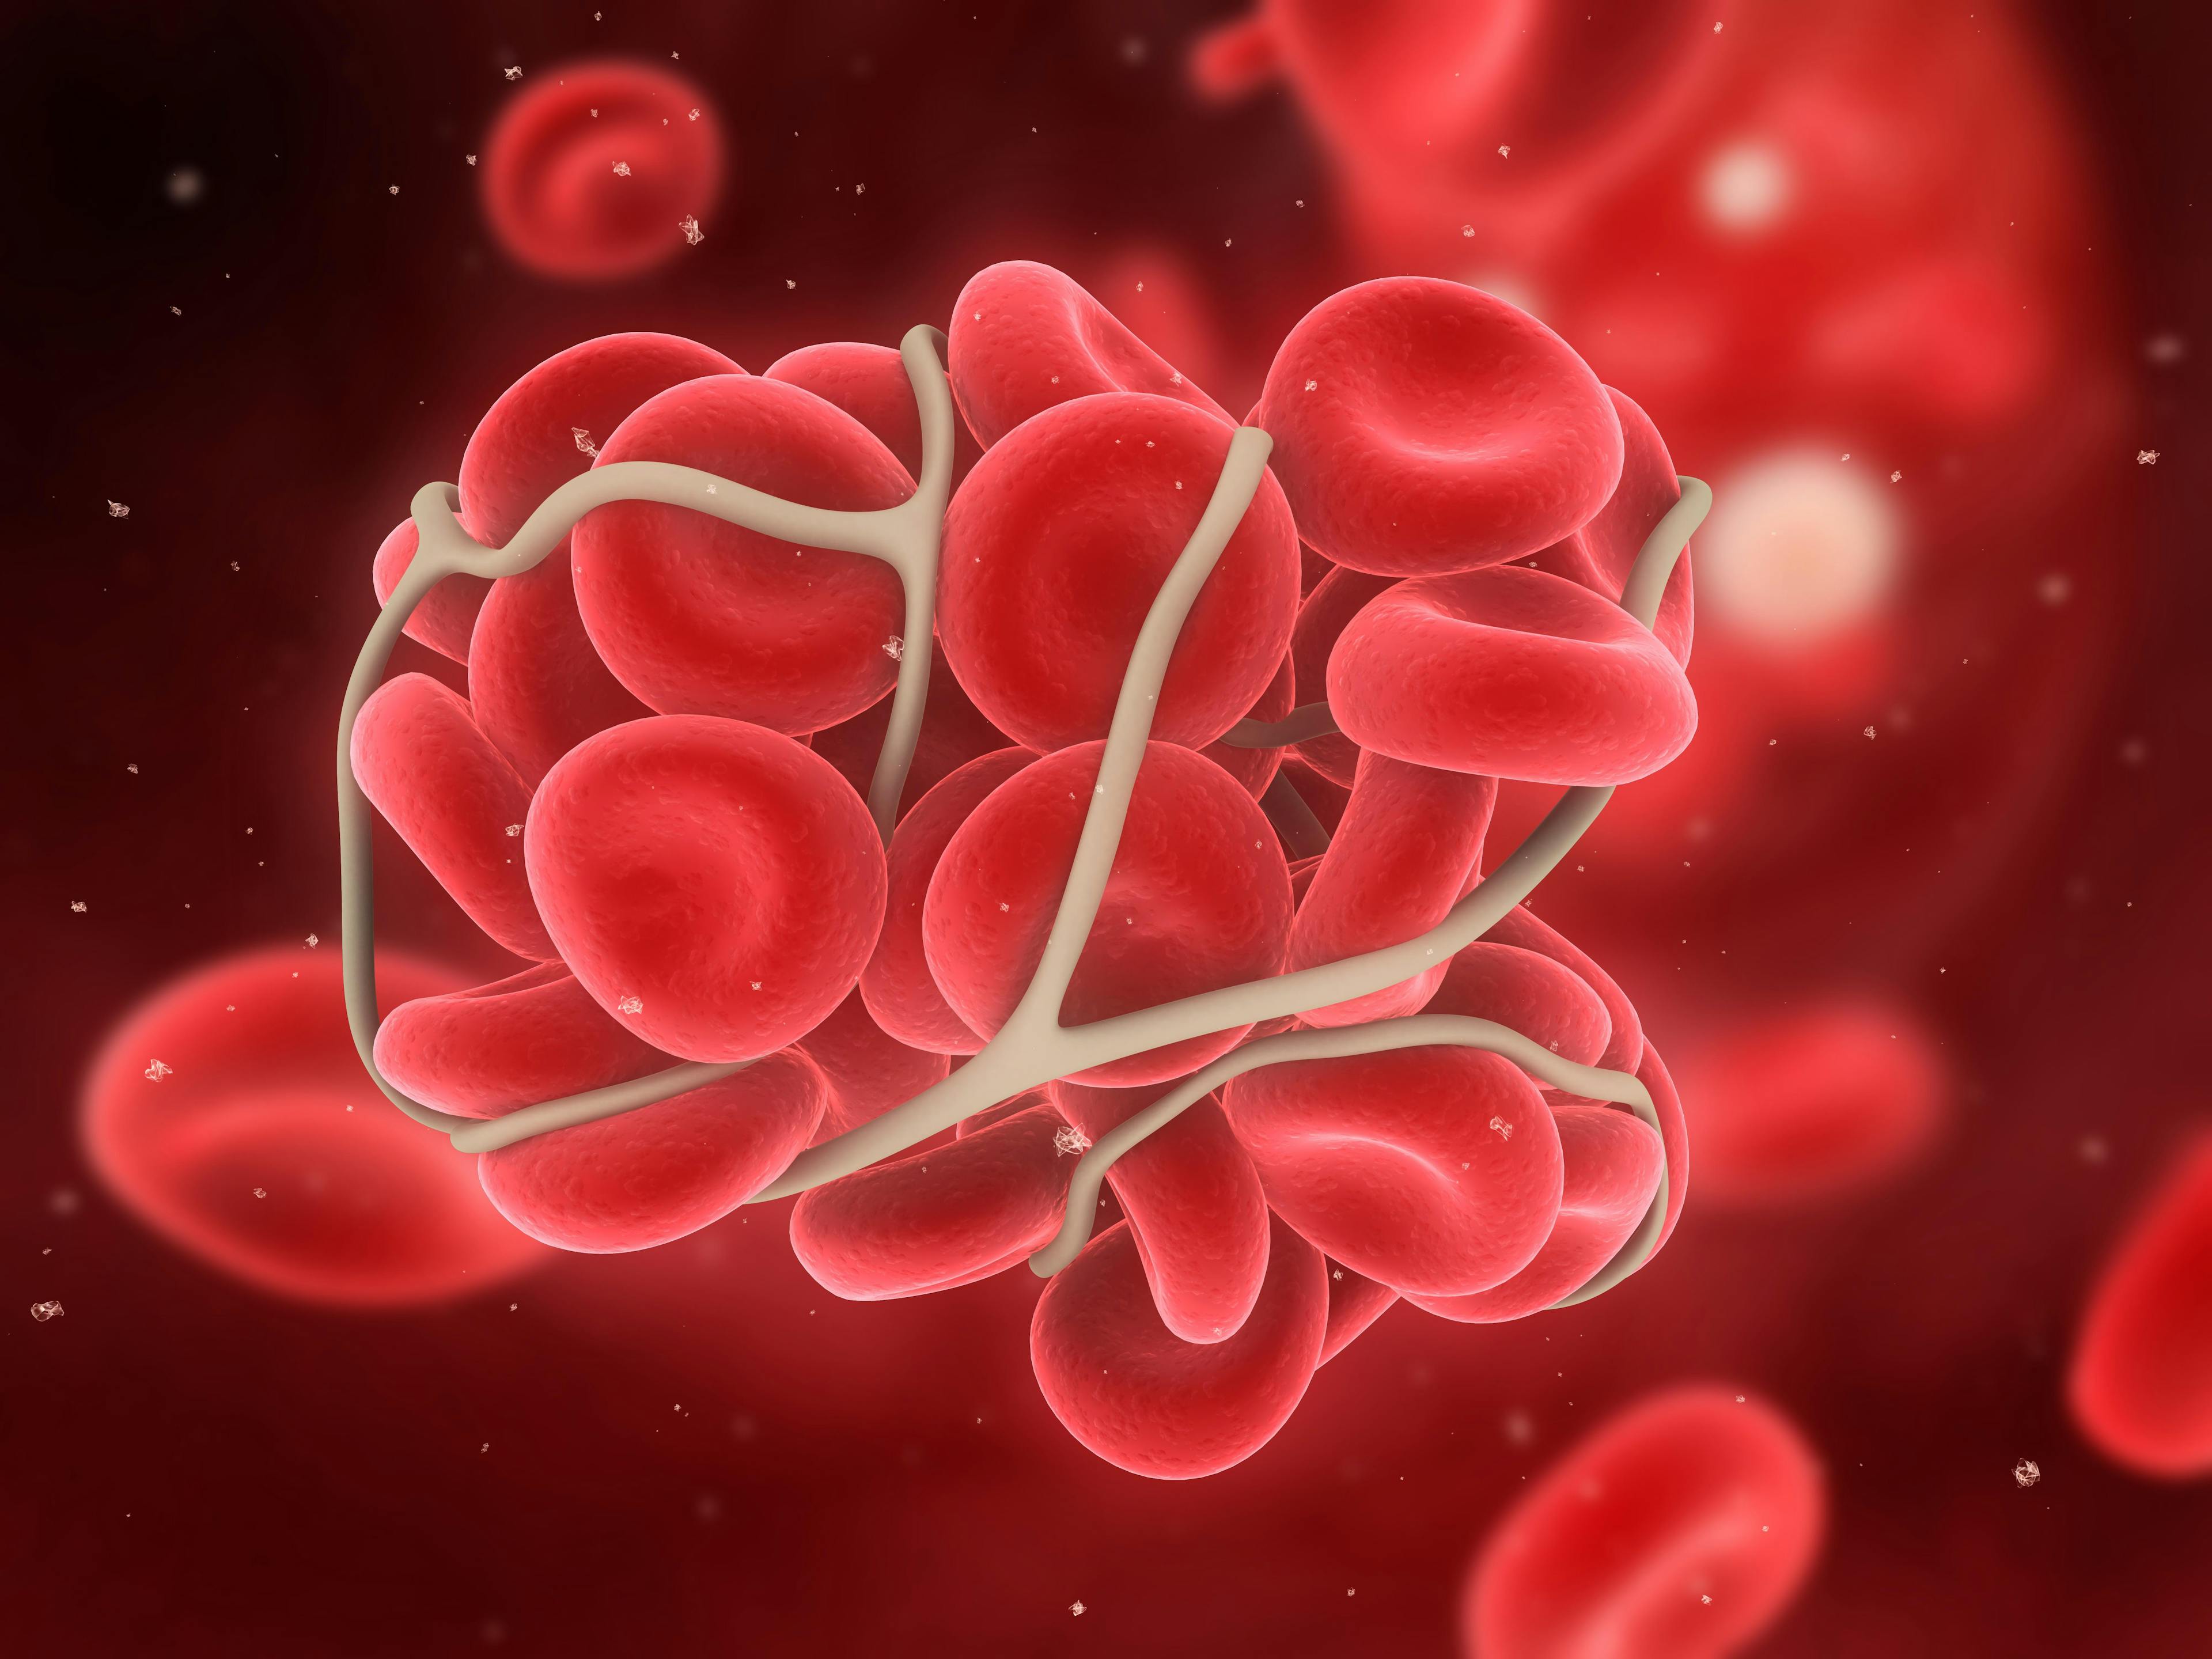 Digital illustration of a blood clot.